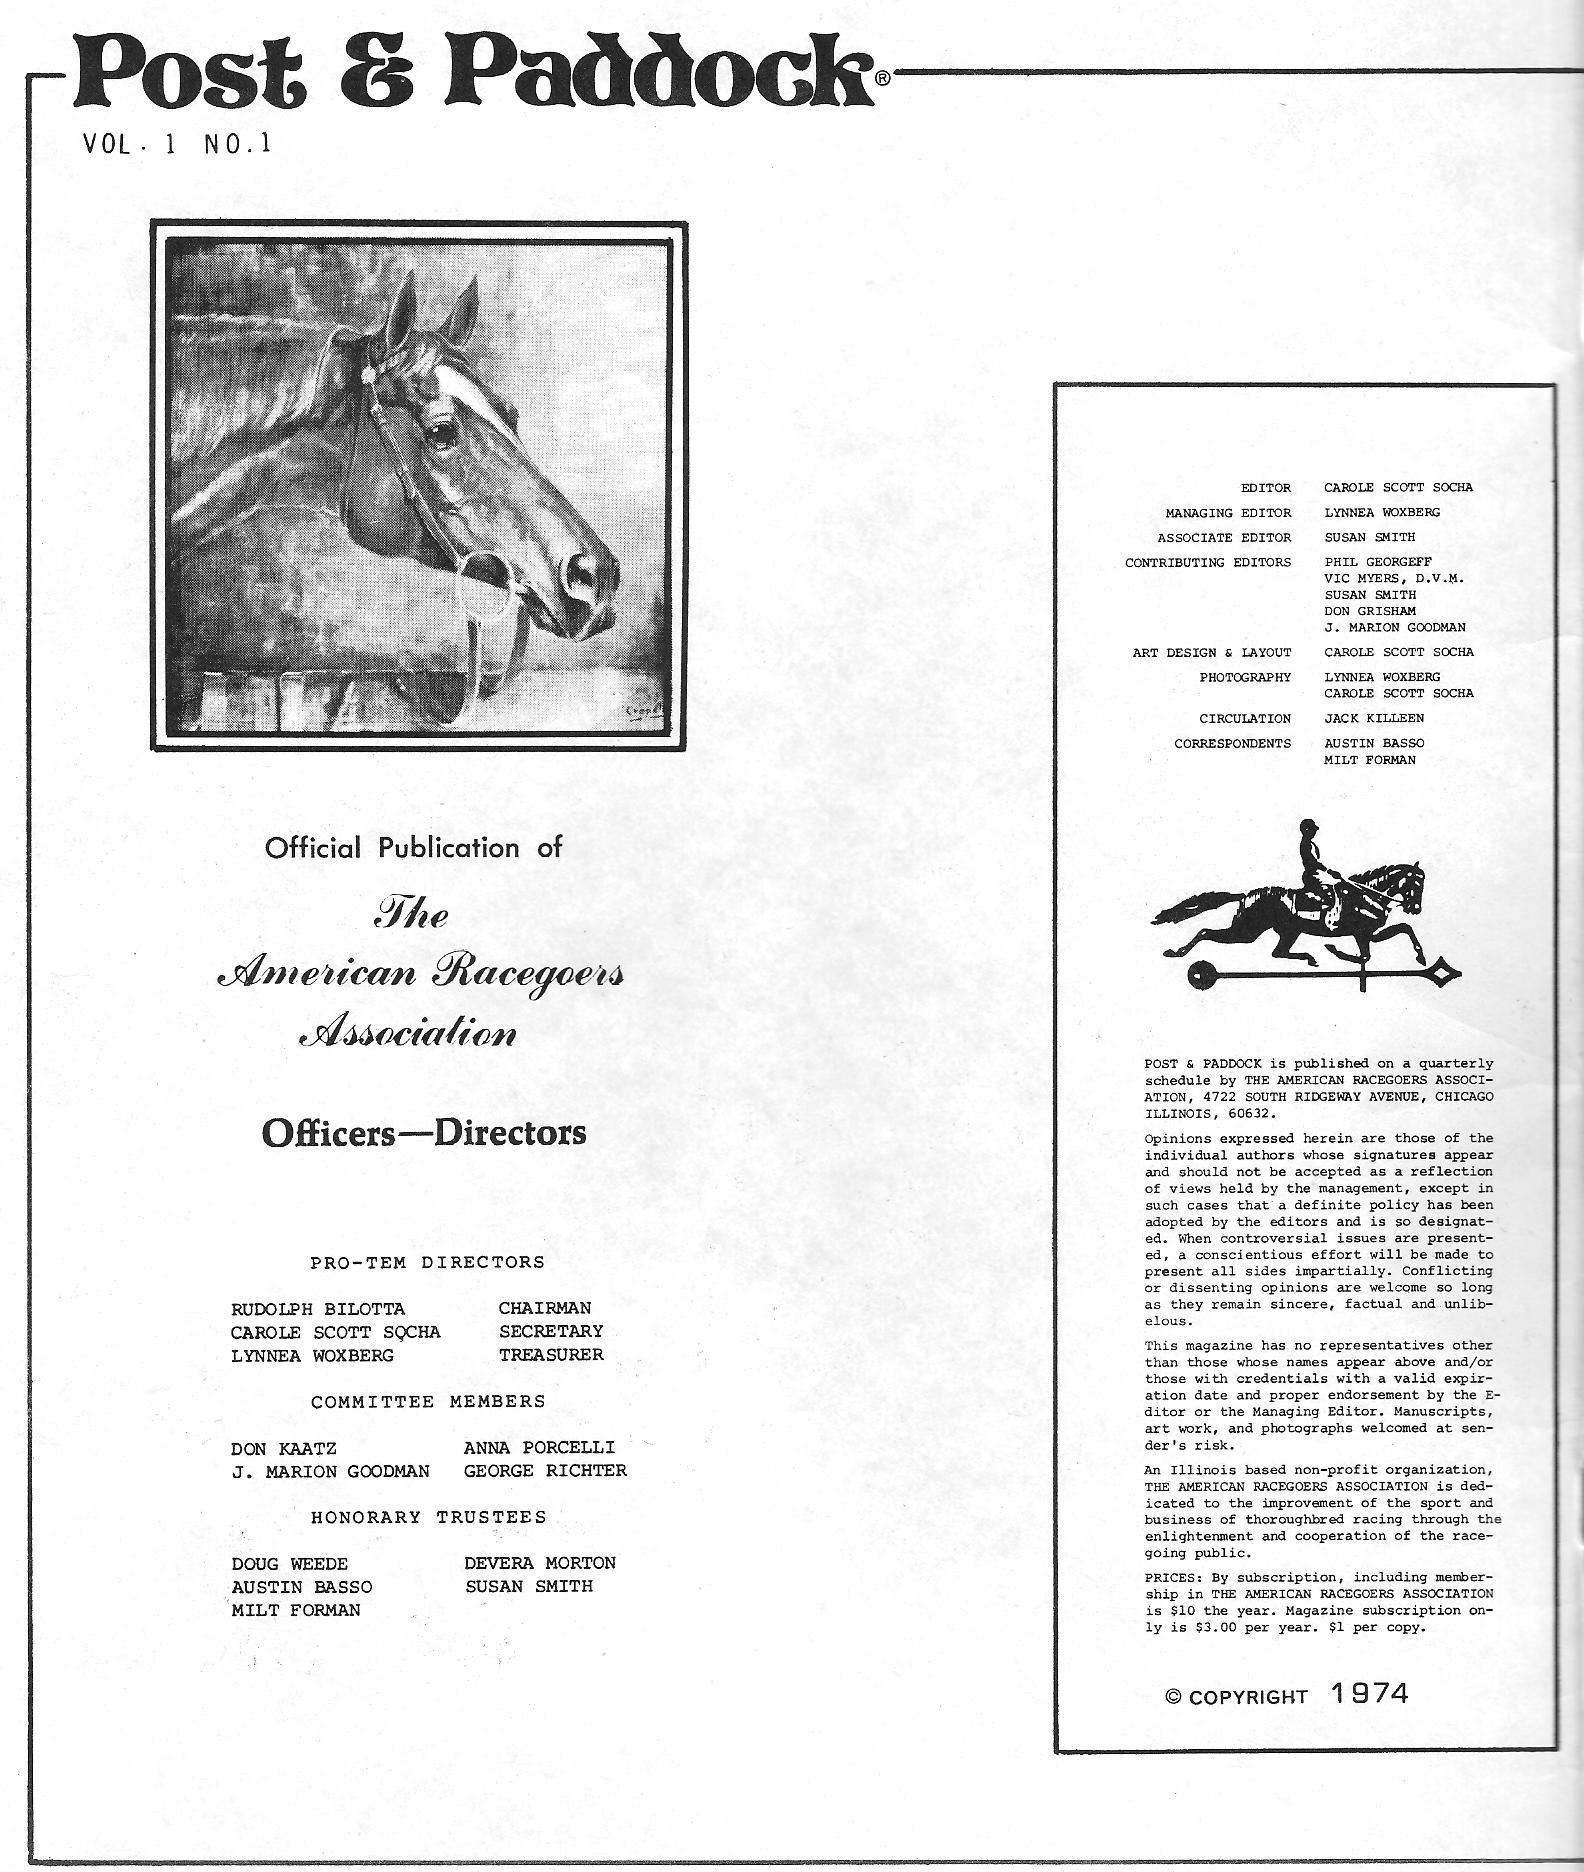 POST & PADDOCK MAGAZINE - OFFICIAL PUBLICATION OF THE AMERICAN RACEGOERS ASSOCIATION (TARA)- 1974-75 Editor: Carole Scott Socha Managing Editor: Lynnea Woxberg